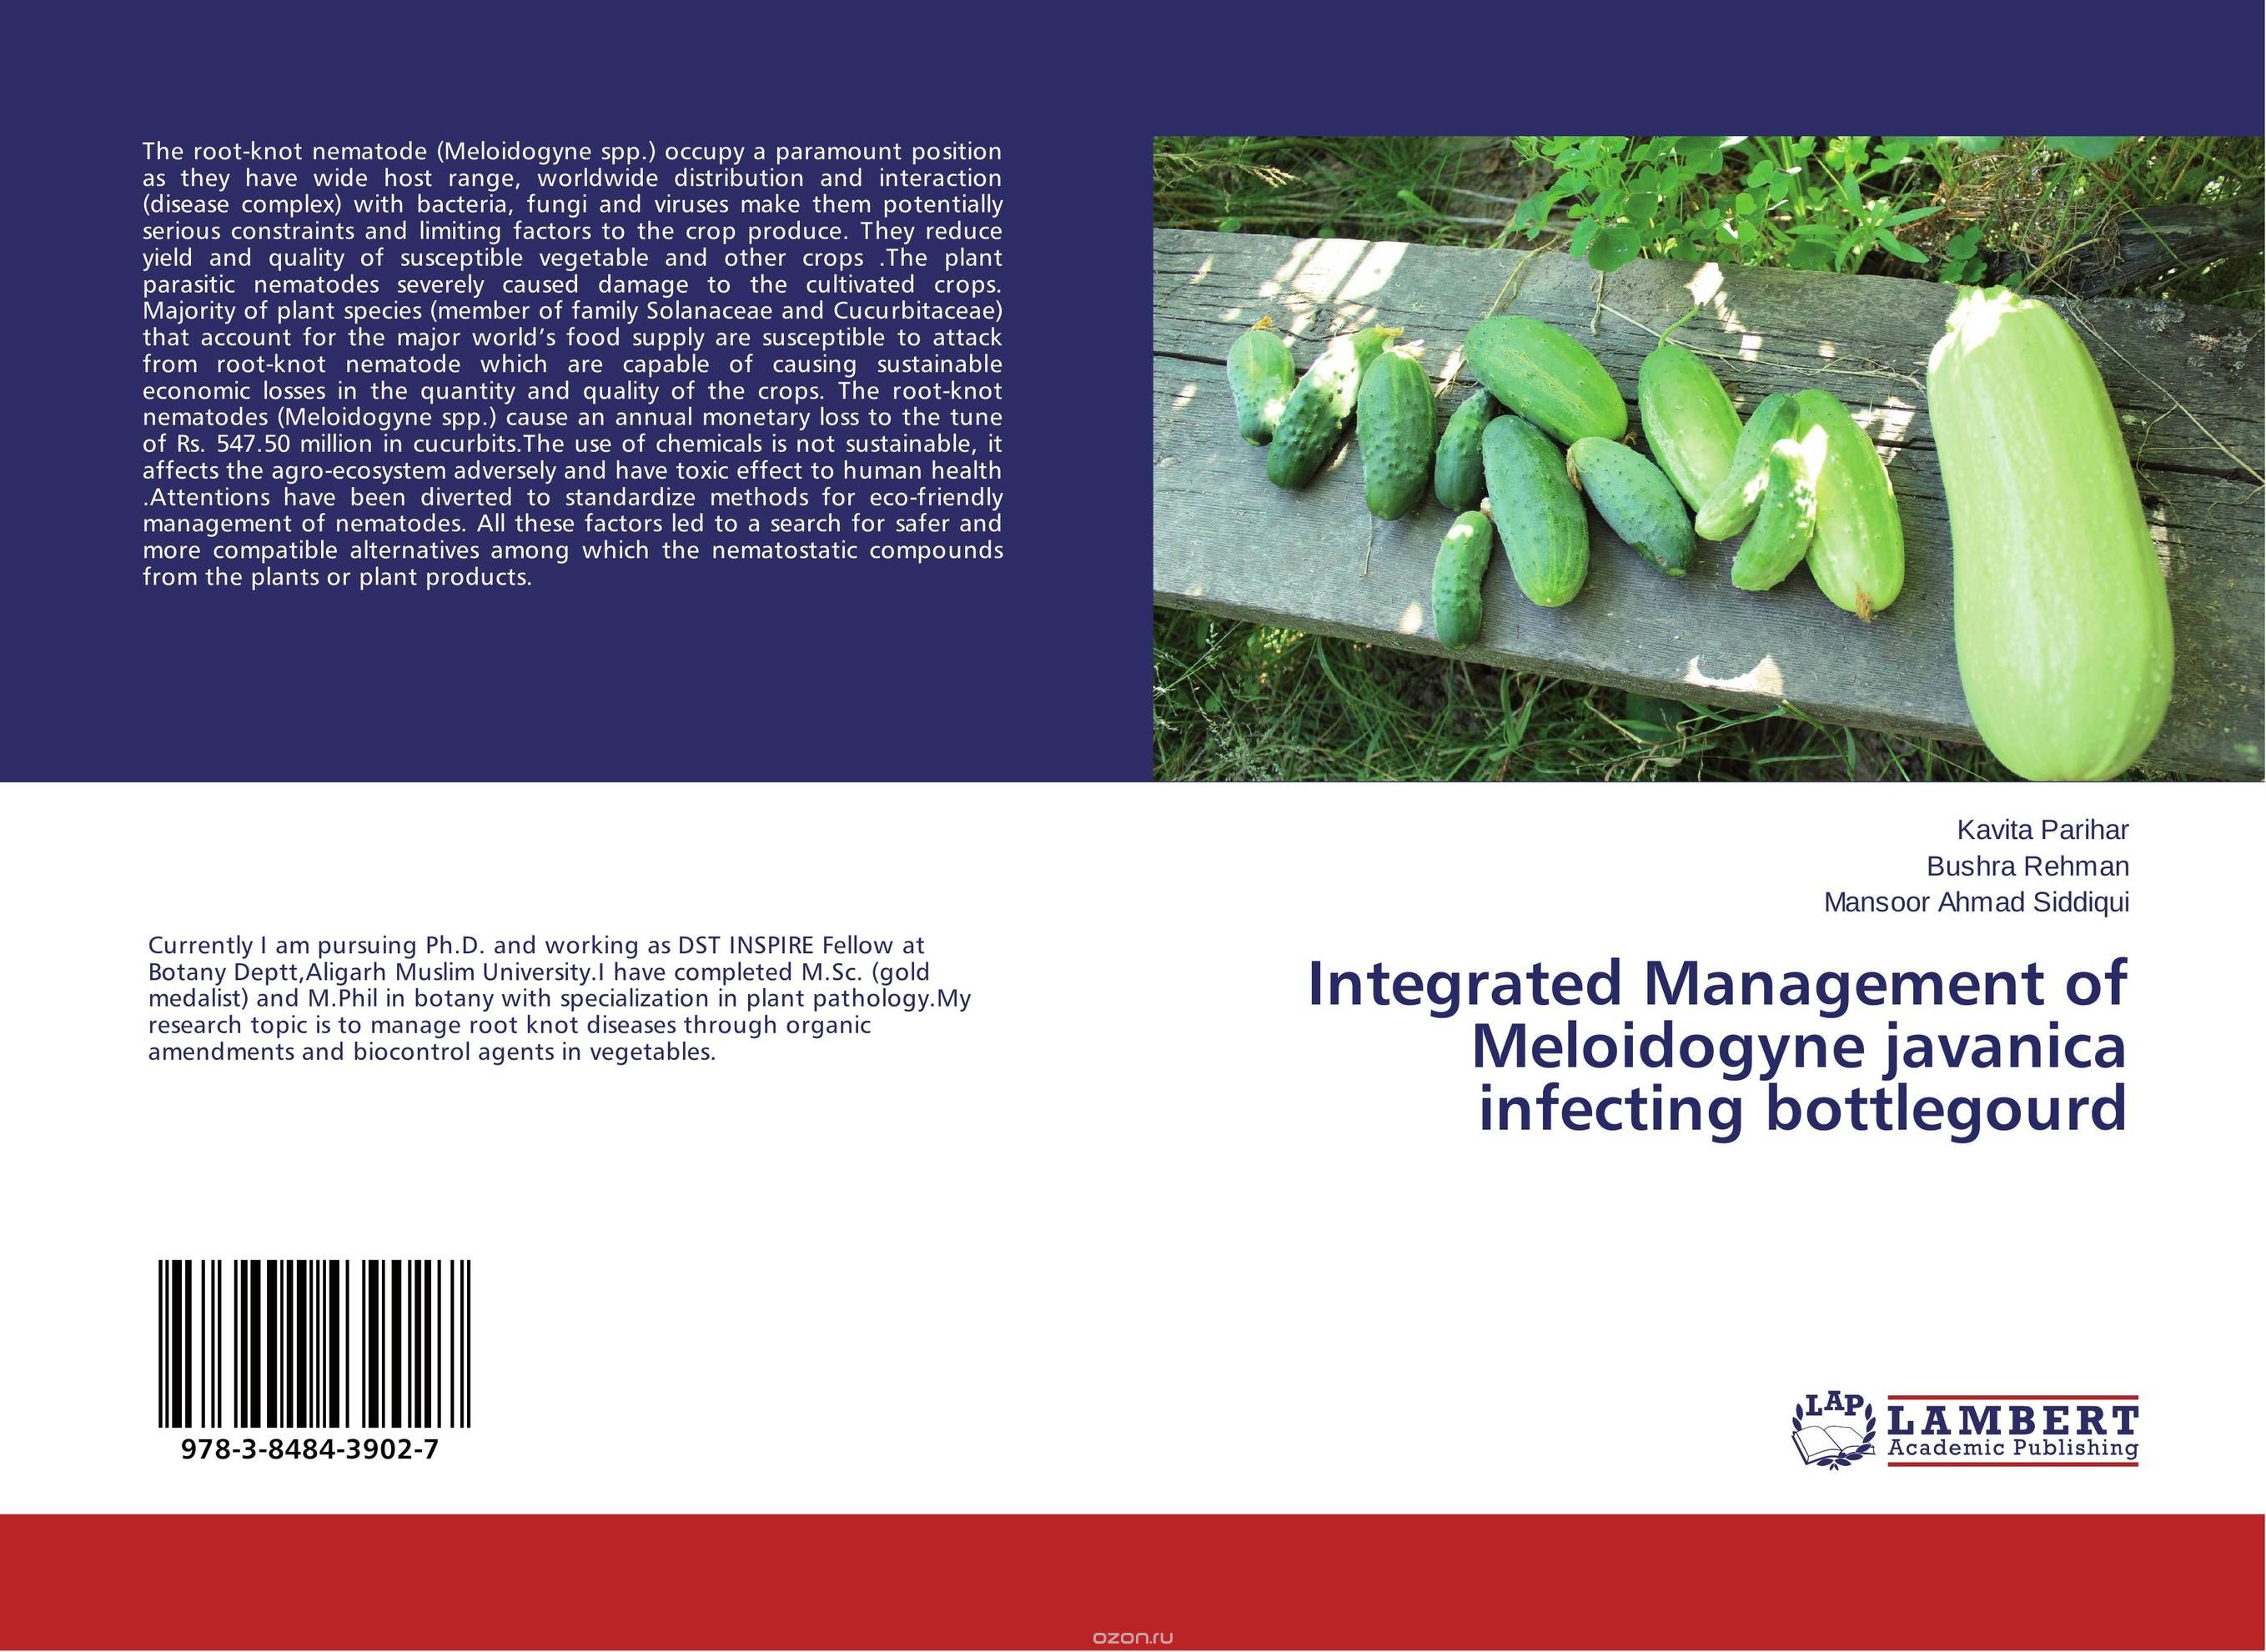 Integrated Management of Meloidogyne javanica infecting bottlegourd